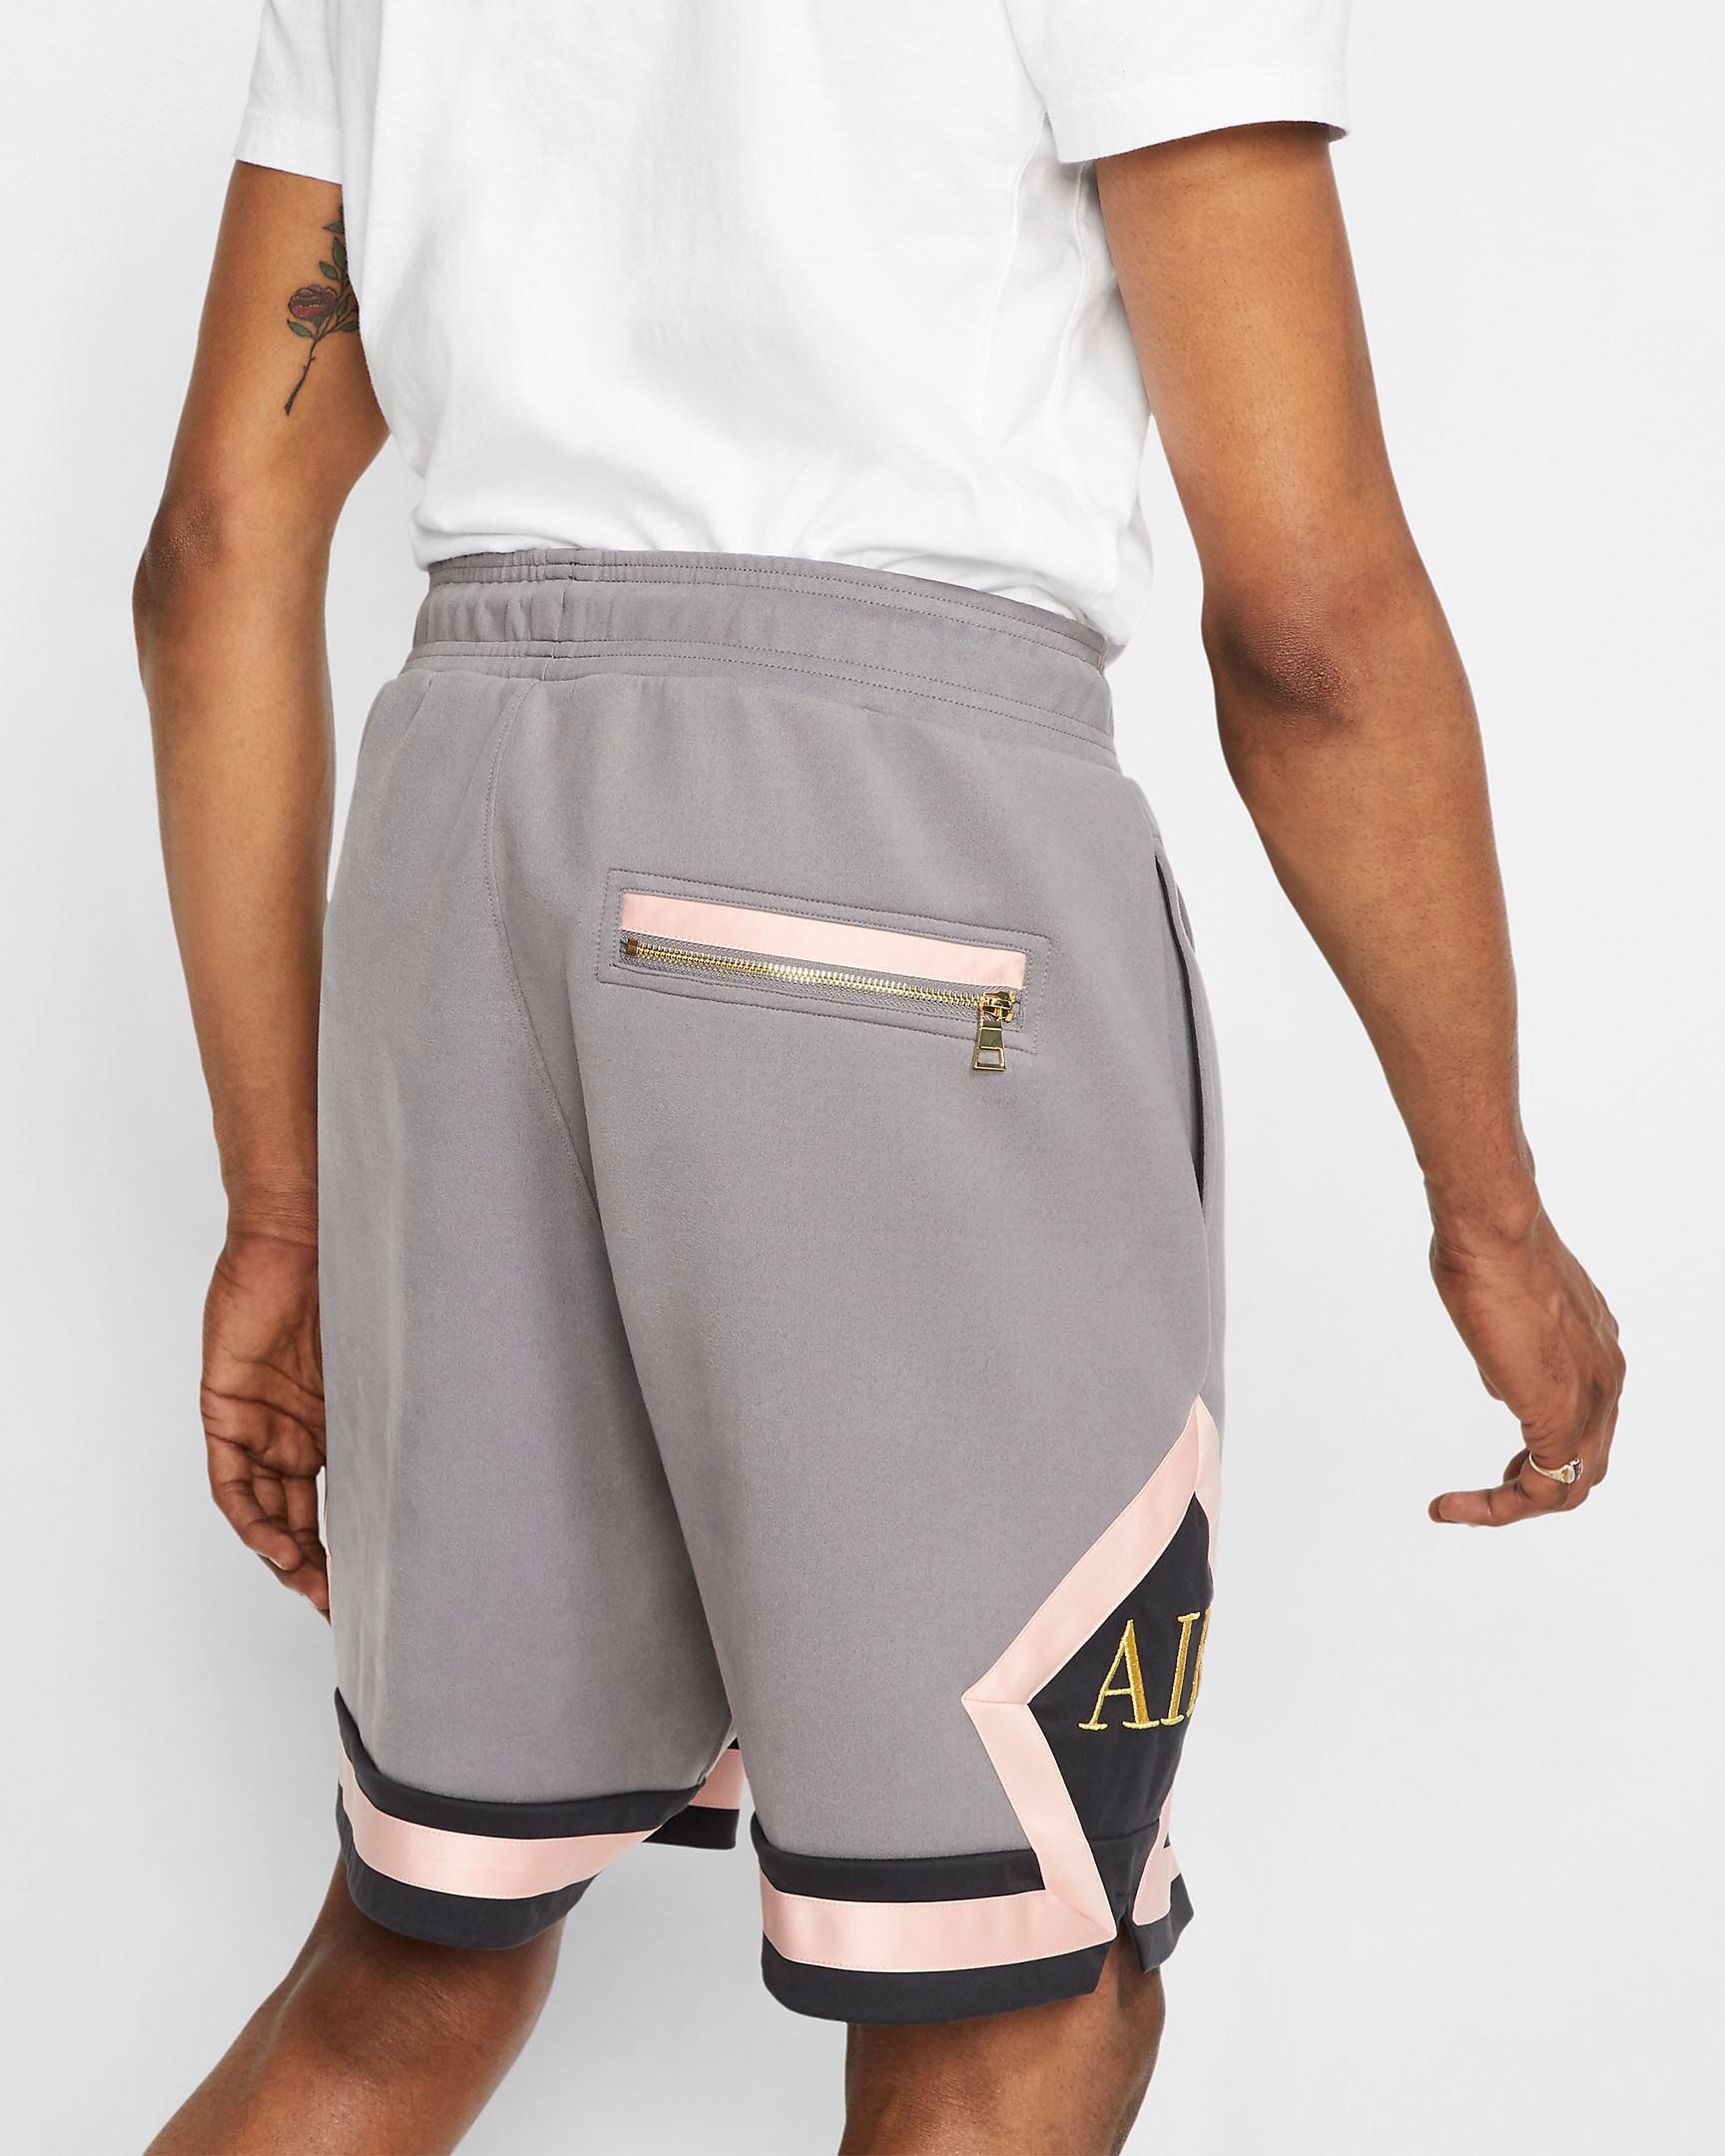 jordan-remastered-diamond-shorts-grey-pink-3